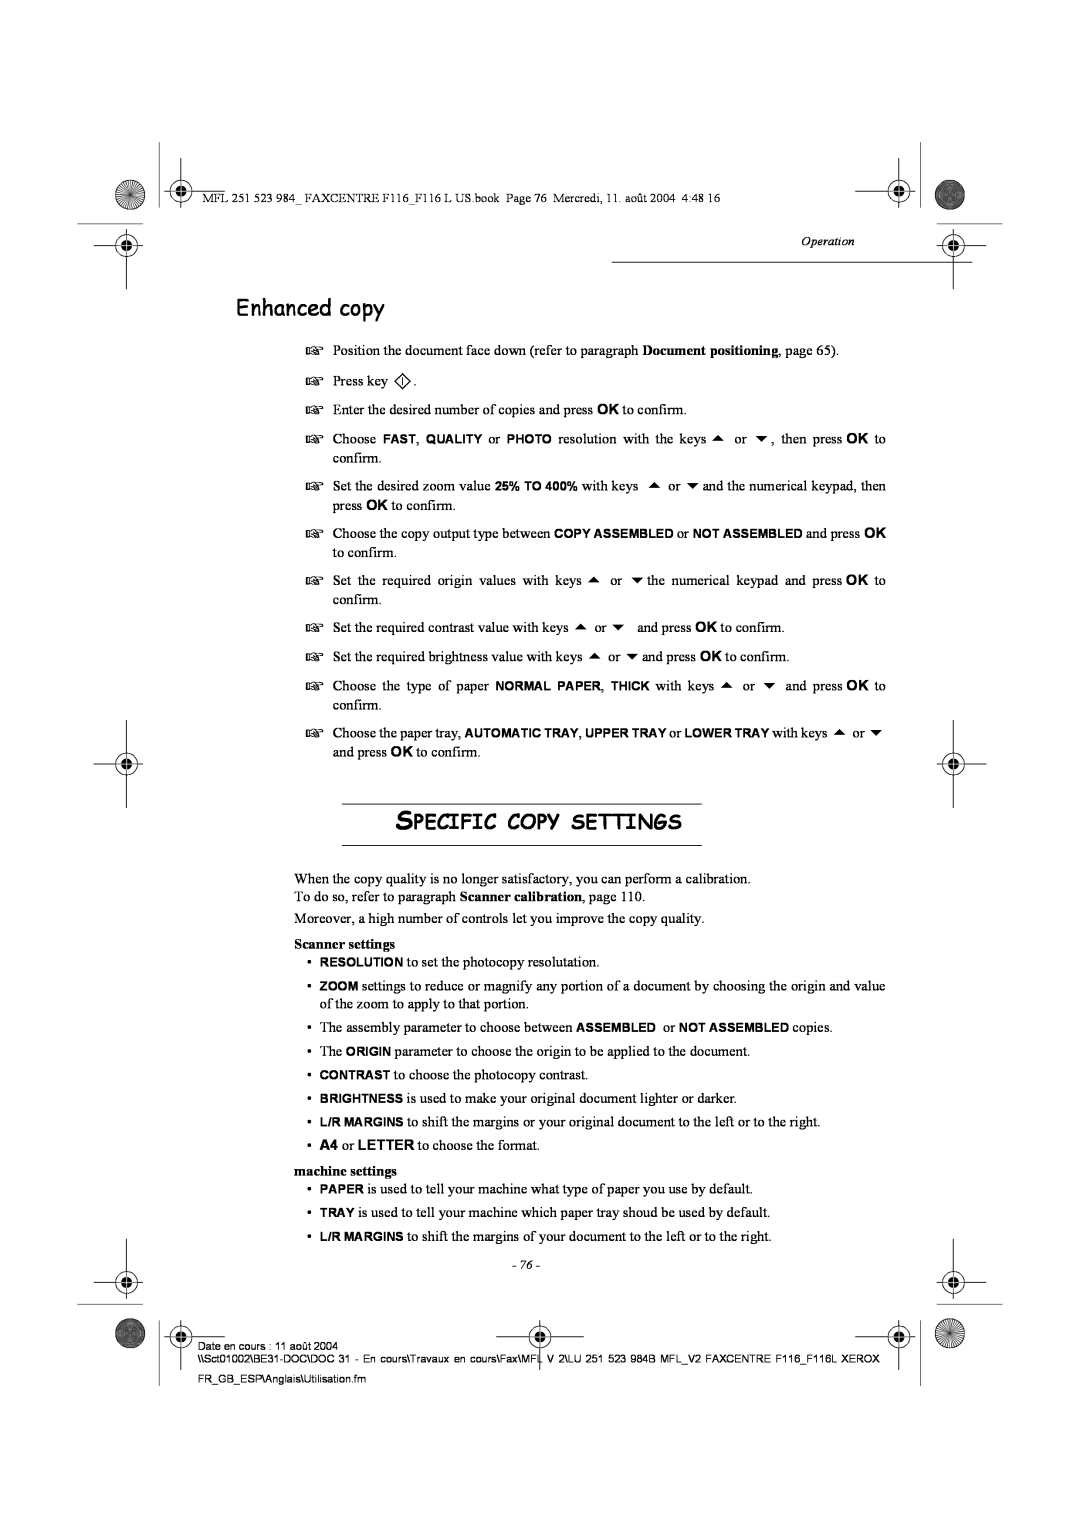 Xerox F116 user manual Enhanced copy, Specific Copy Settings, Scanner settings, machine settings 